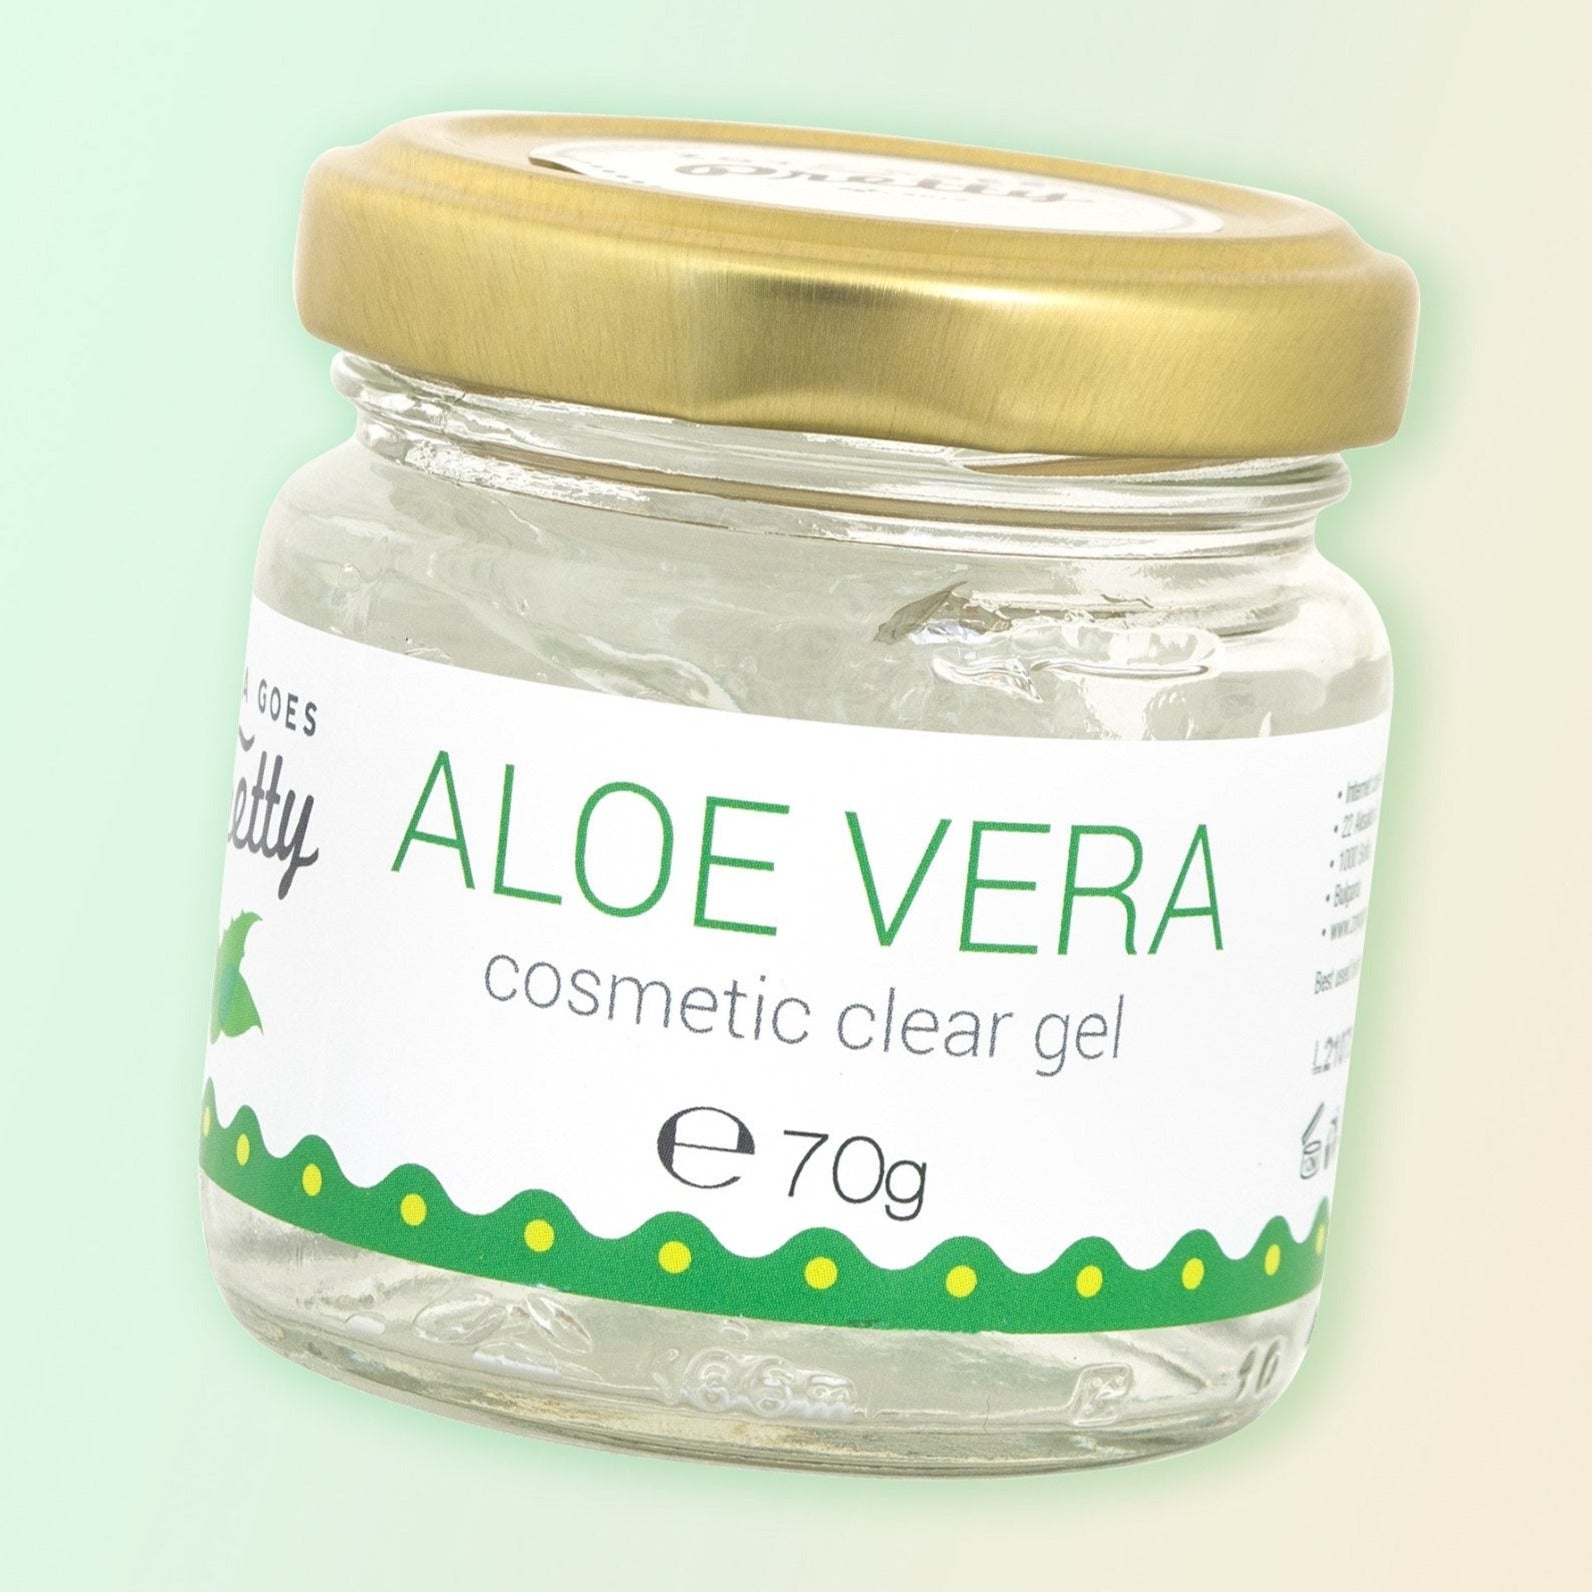 Gel Cosmetico all'Aloe Vera Zoya Goes Pretty